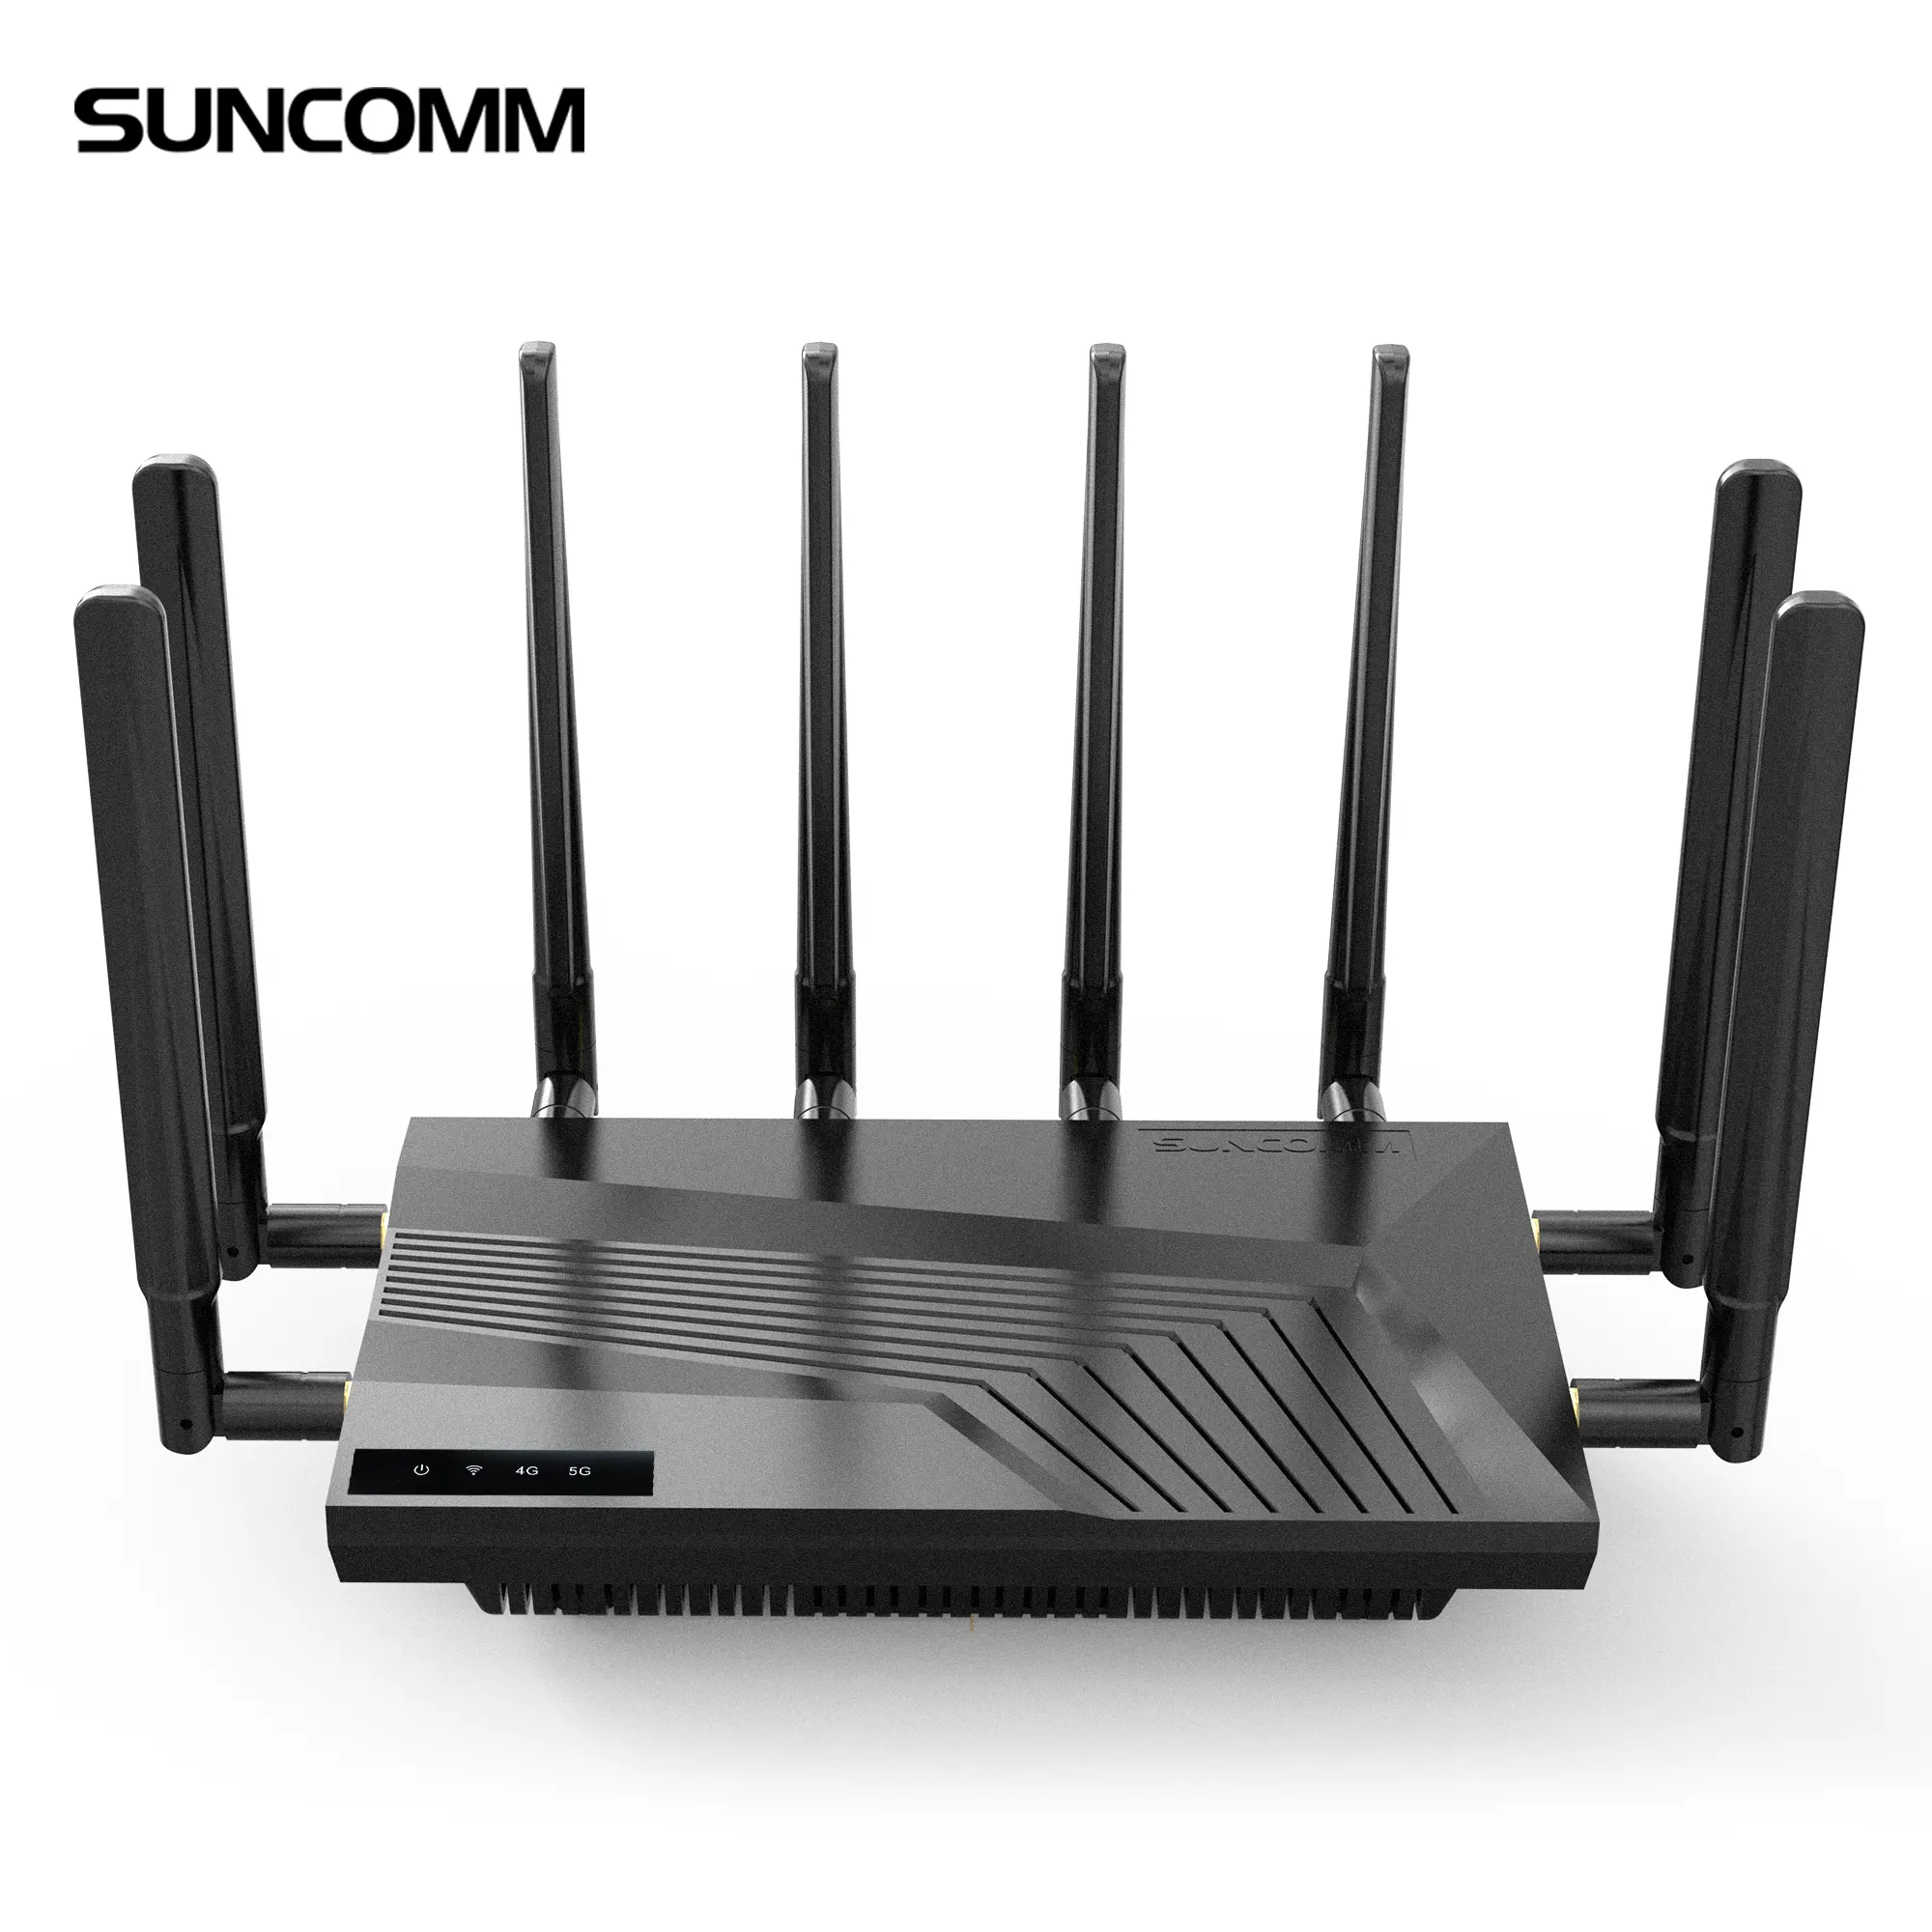 SUNCOMM SE06 NEU 5G Wireless WiFi Router Externe Antenne Hochgeschwindigkeits-Internet zugang 2.4G 5.8G 5G Router mit SIM-Kartens teck platz